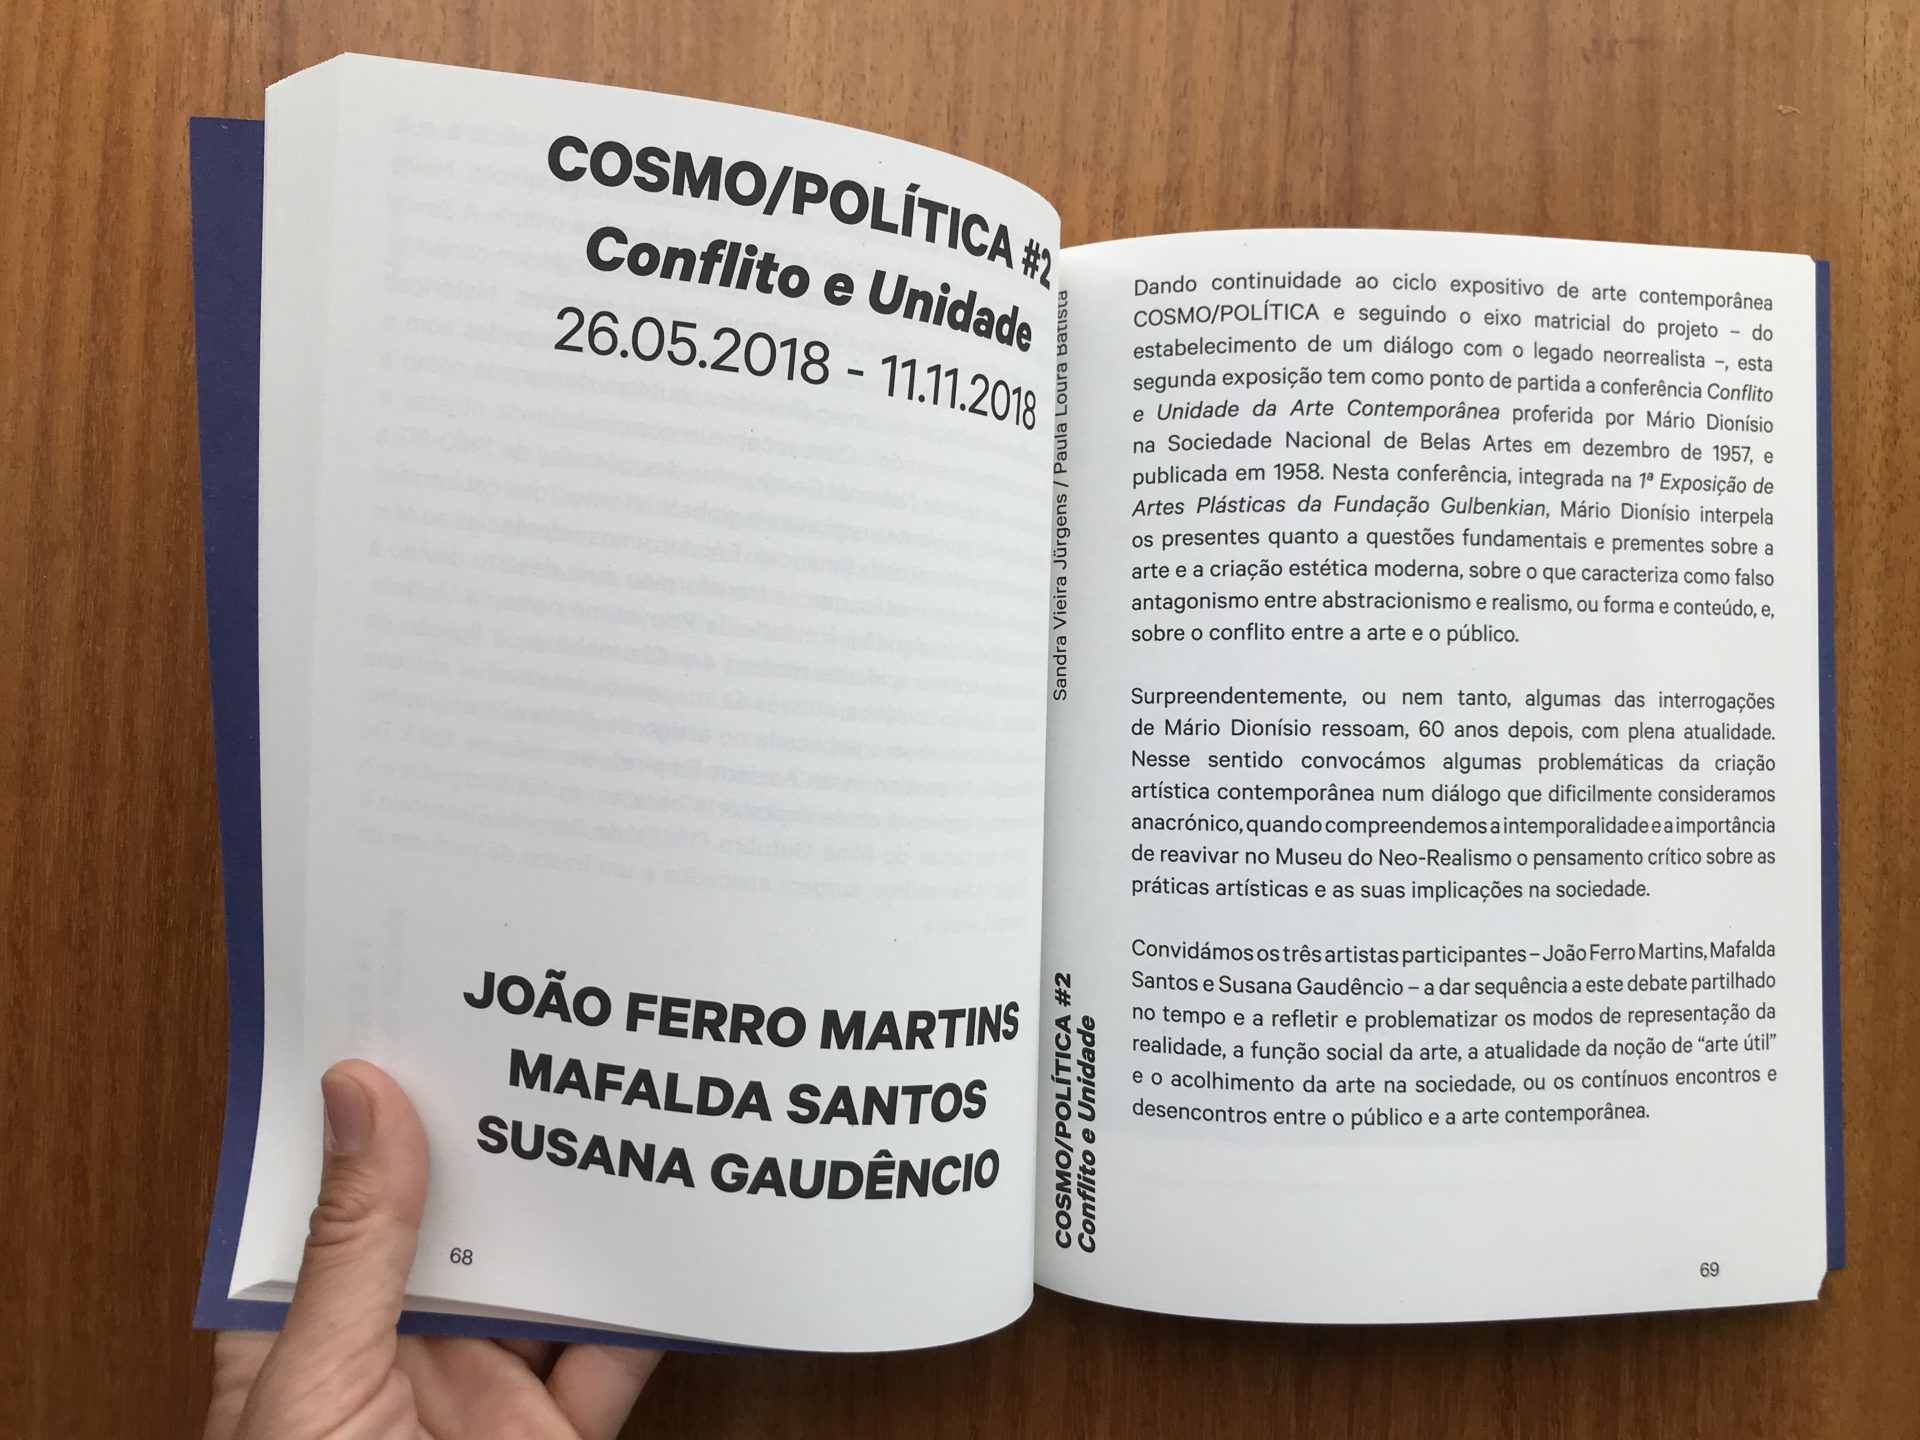 Cosmo/Política #2 Conflito e Unidade | Mafalda Santos artista